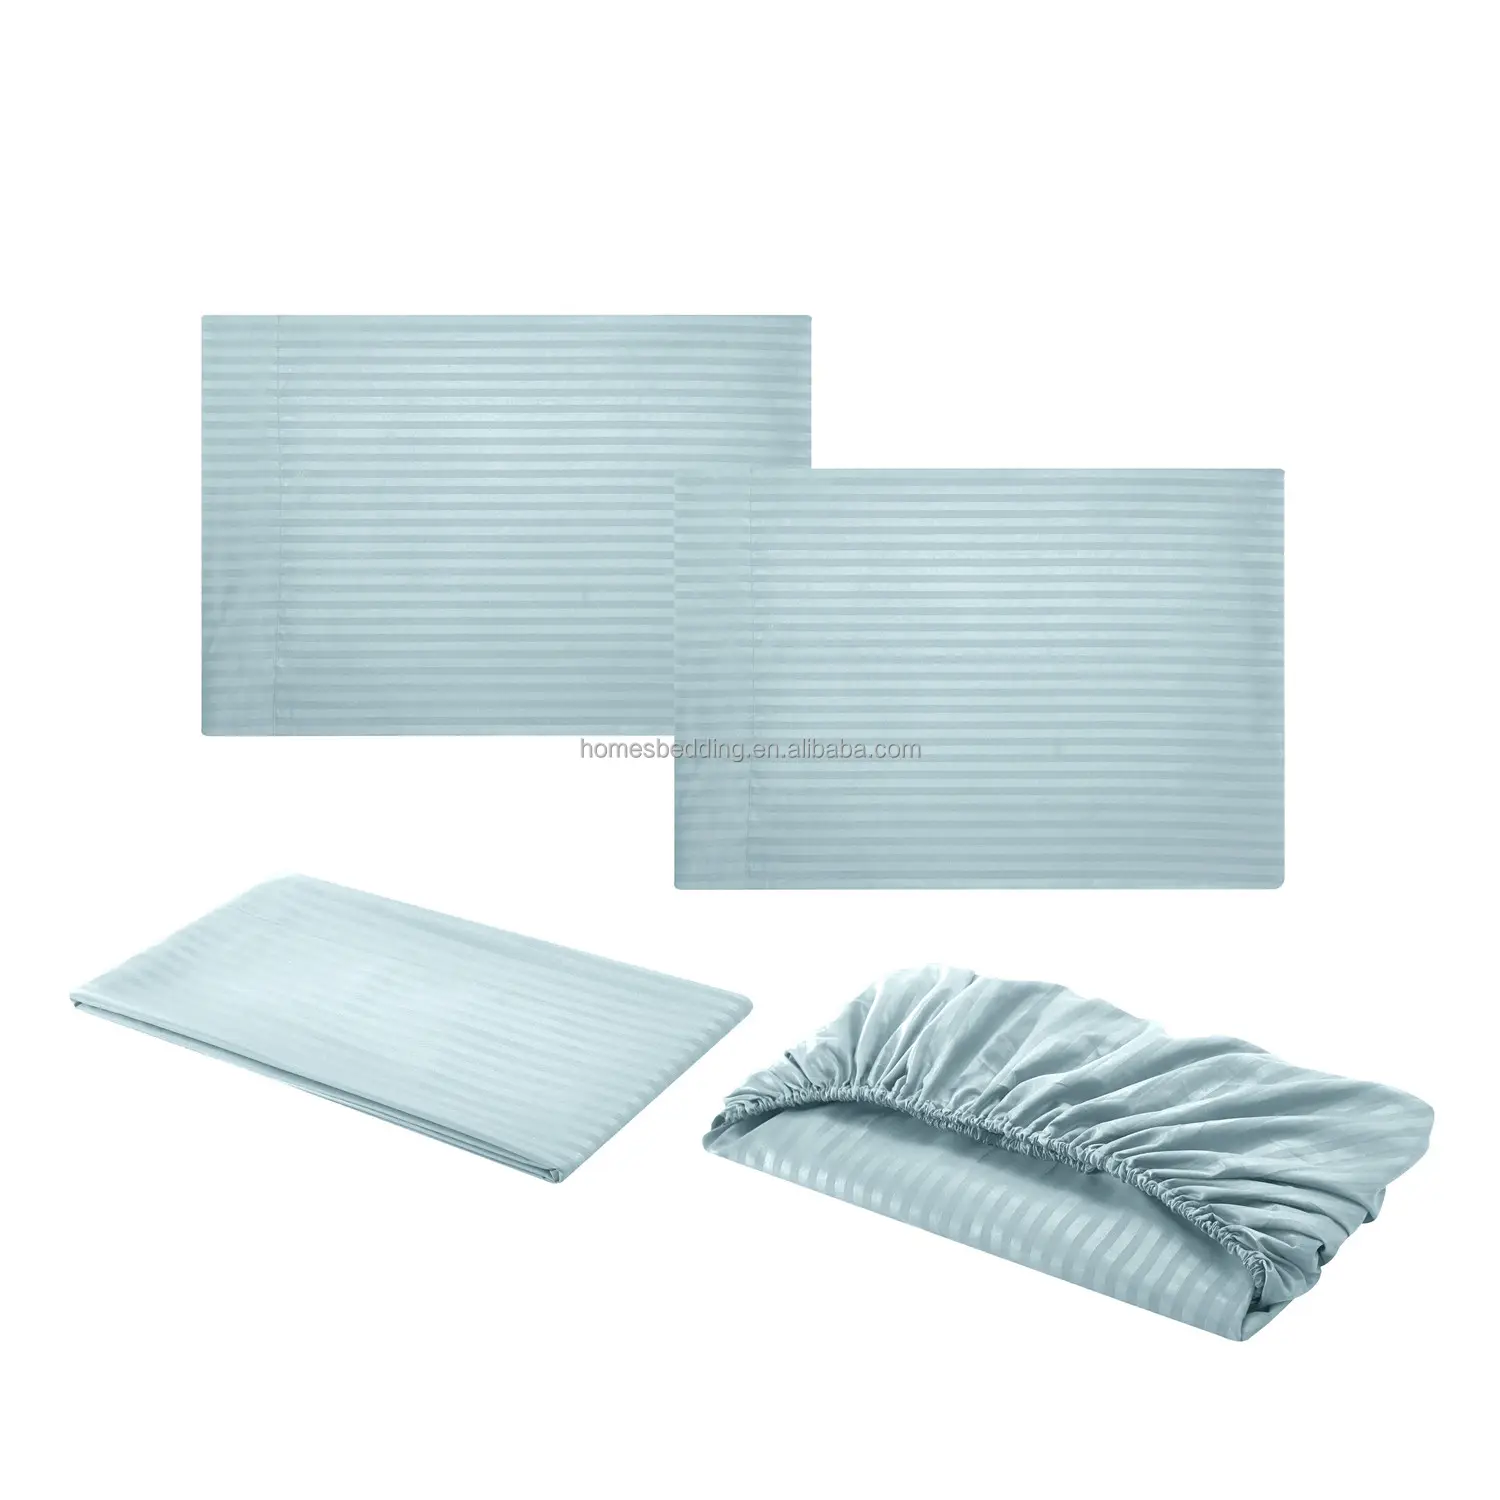 Homes bedding brushed microfiber stripe style QUEEN SIZE 4PCS solid color sky blue sheet set